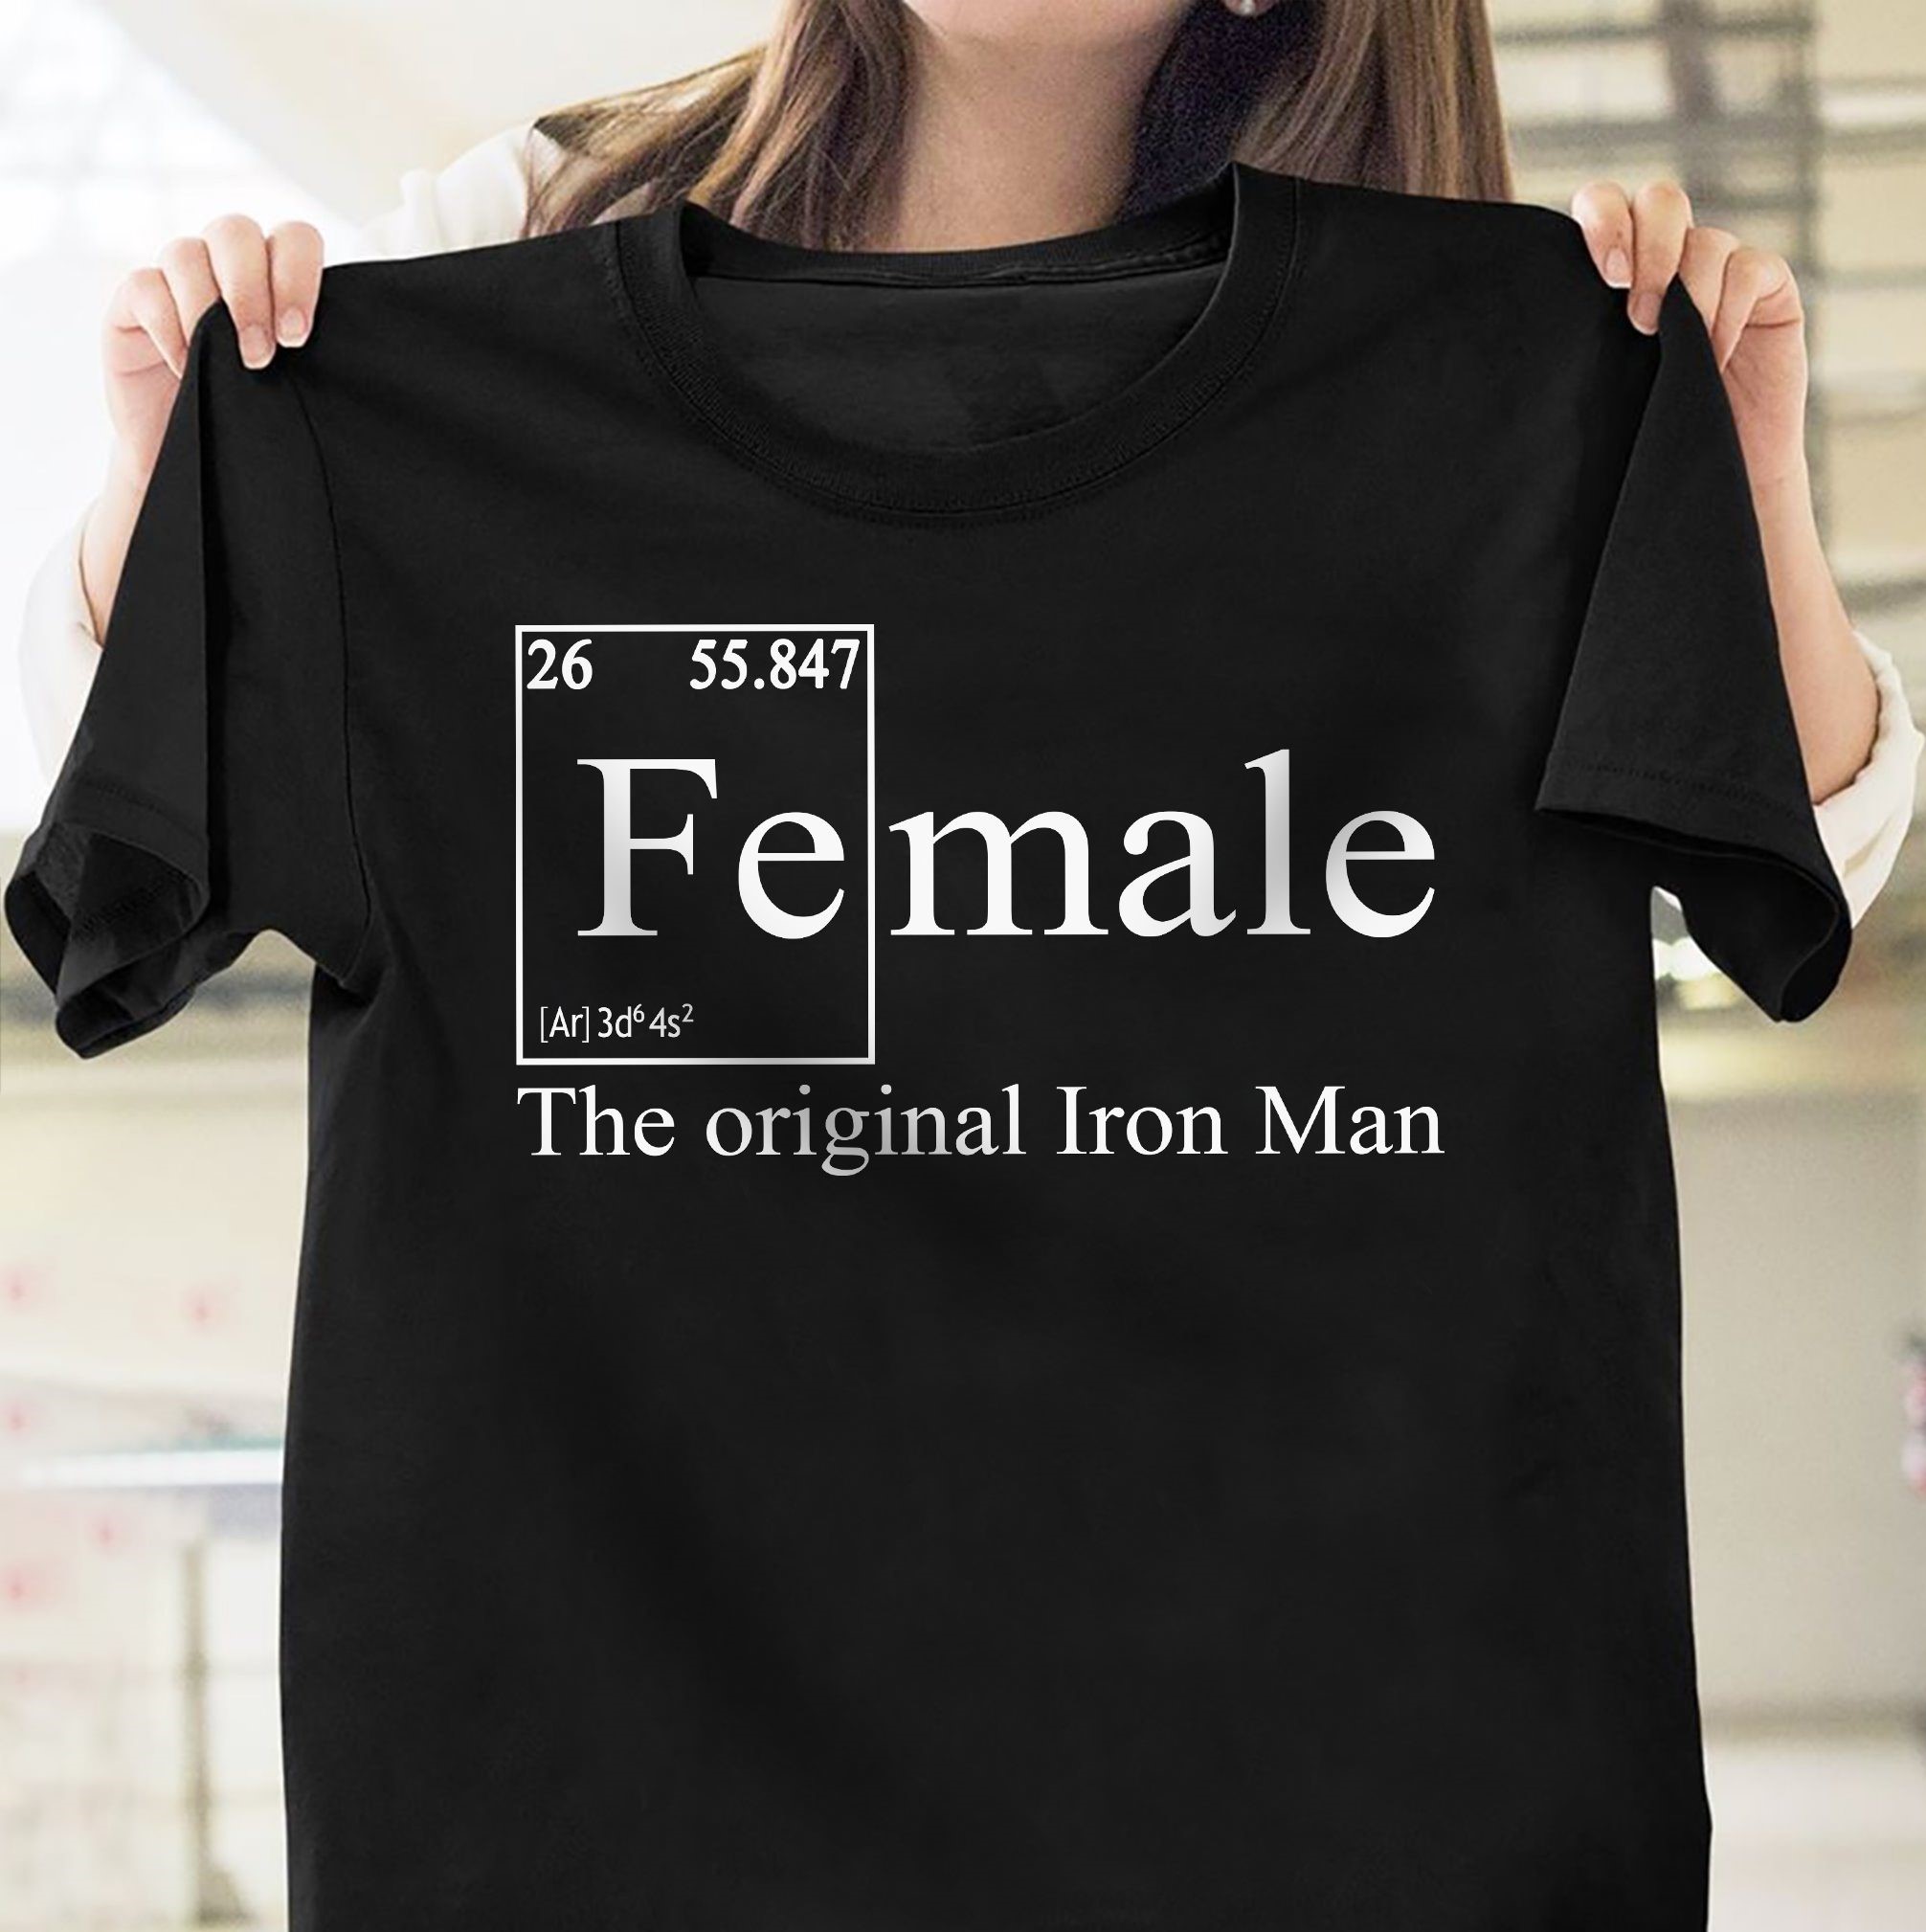 The original Iron Man: Fe-male! (T-shirt design)